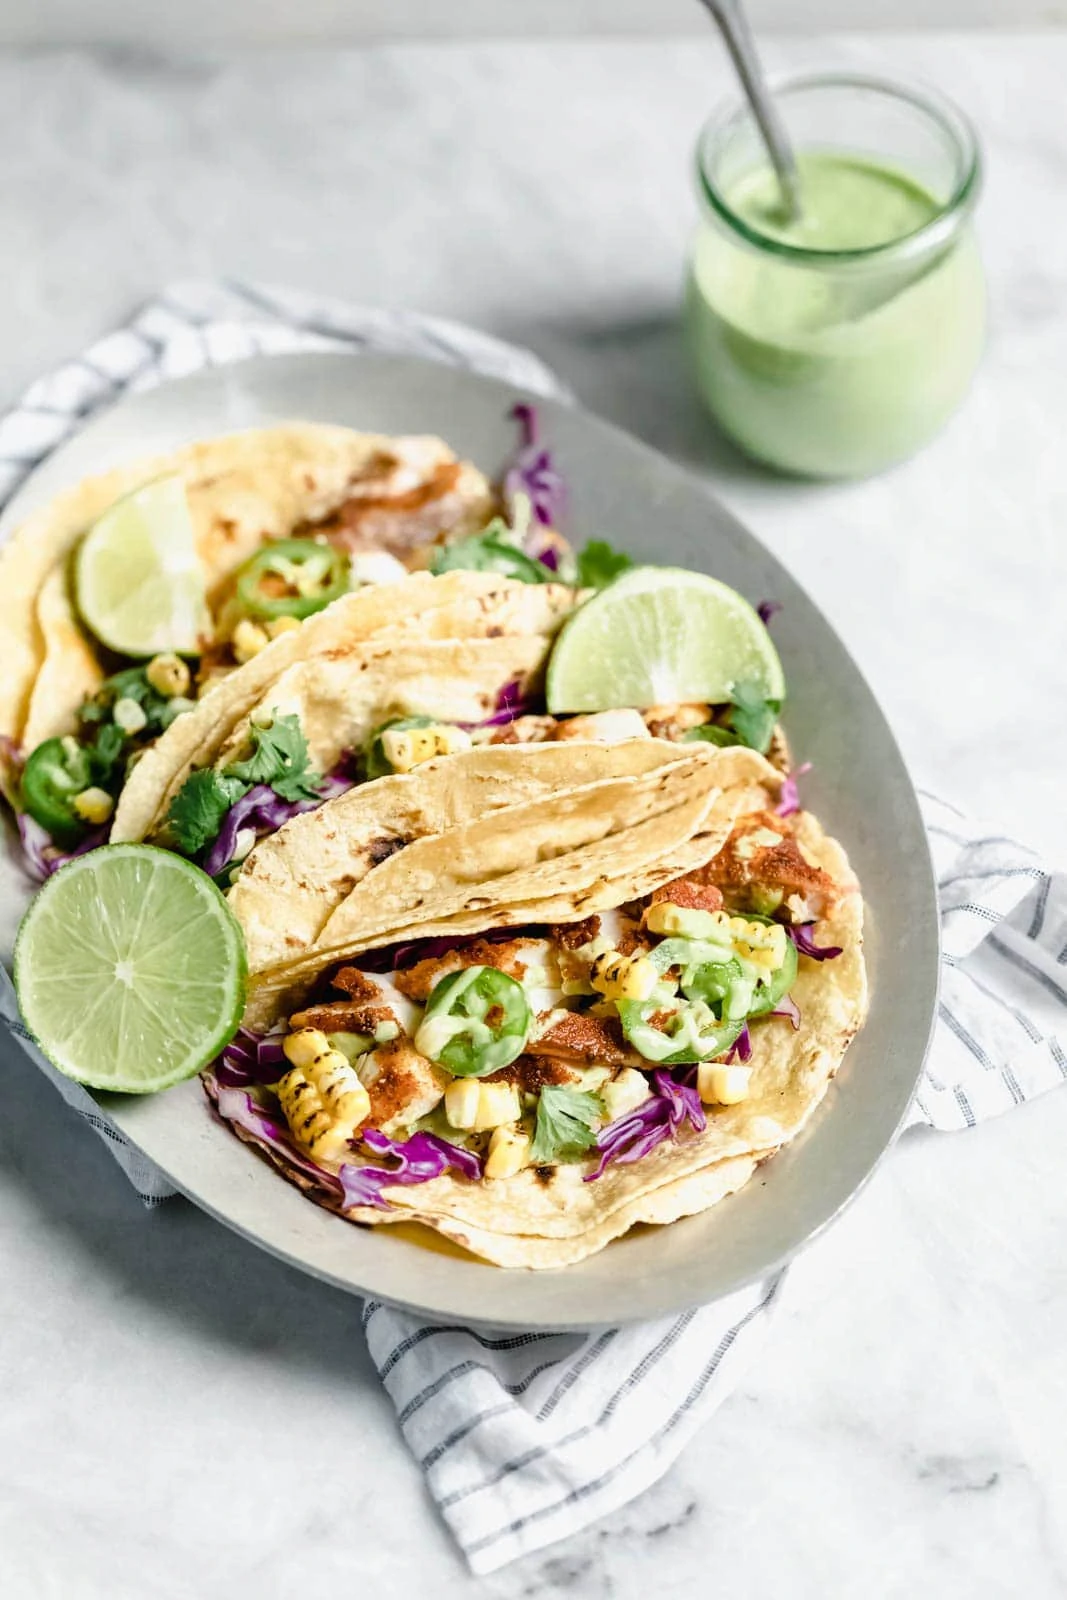 My go-to recipe for Taco Tuesday fish tacos: flakey blackened fish, cabbage, charred corn, jalapeños, and a “creamy” dairy-free avocado cilantro crema!